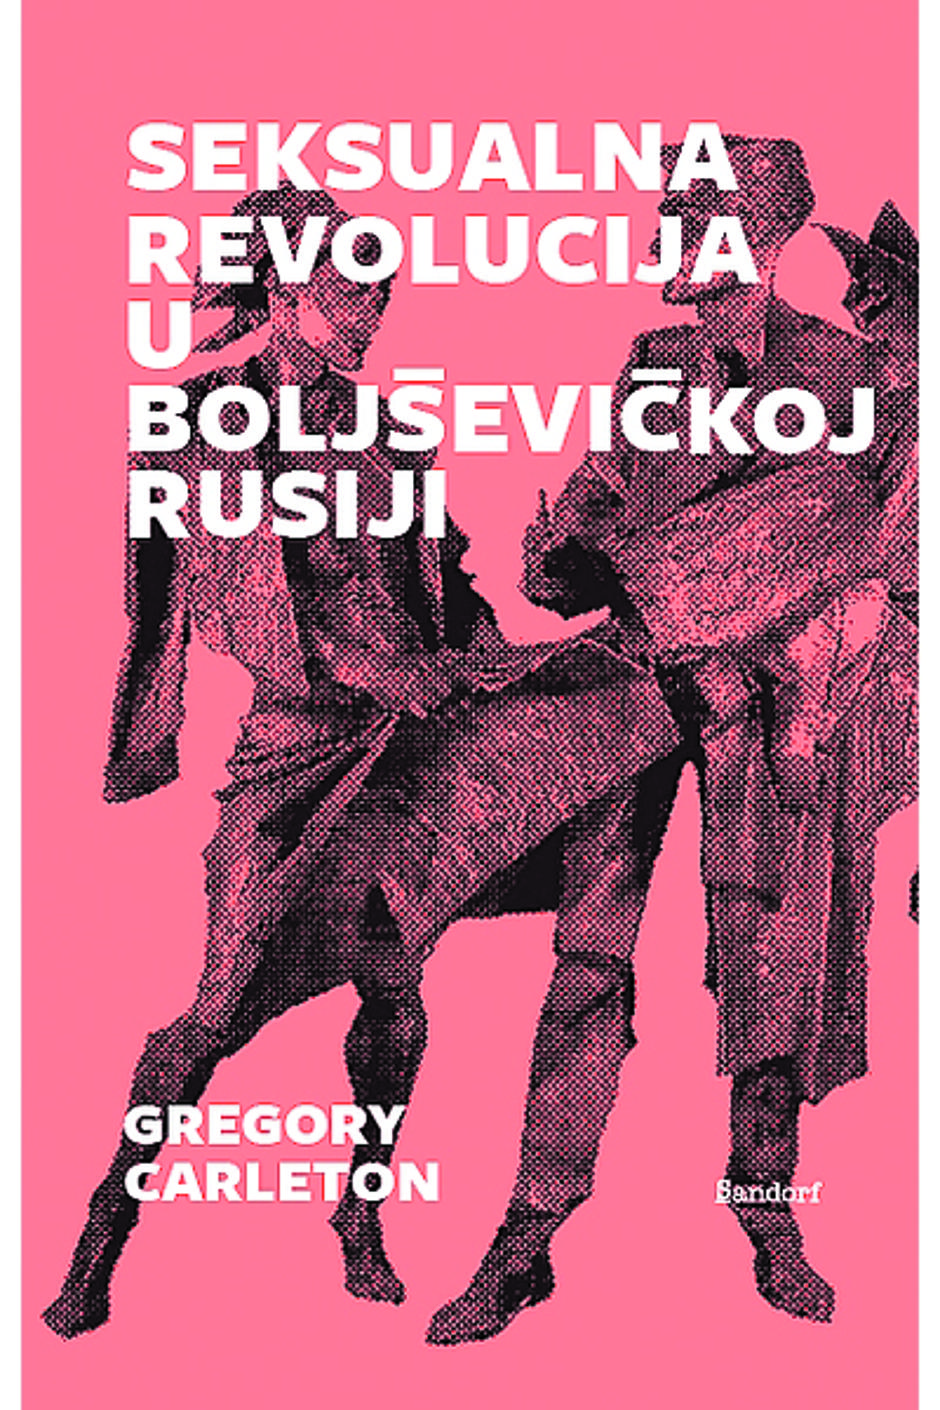 "Seksualna revolucija u boljševičkoj Rusiji", Gregory Carleton | Author: PROMO